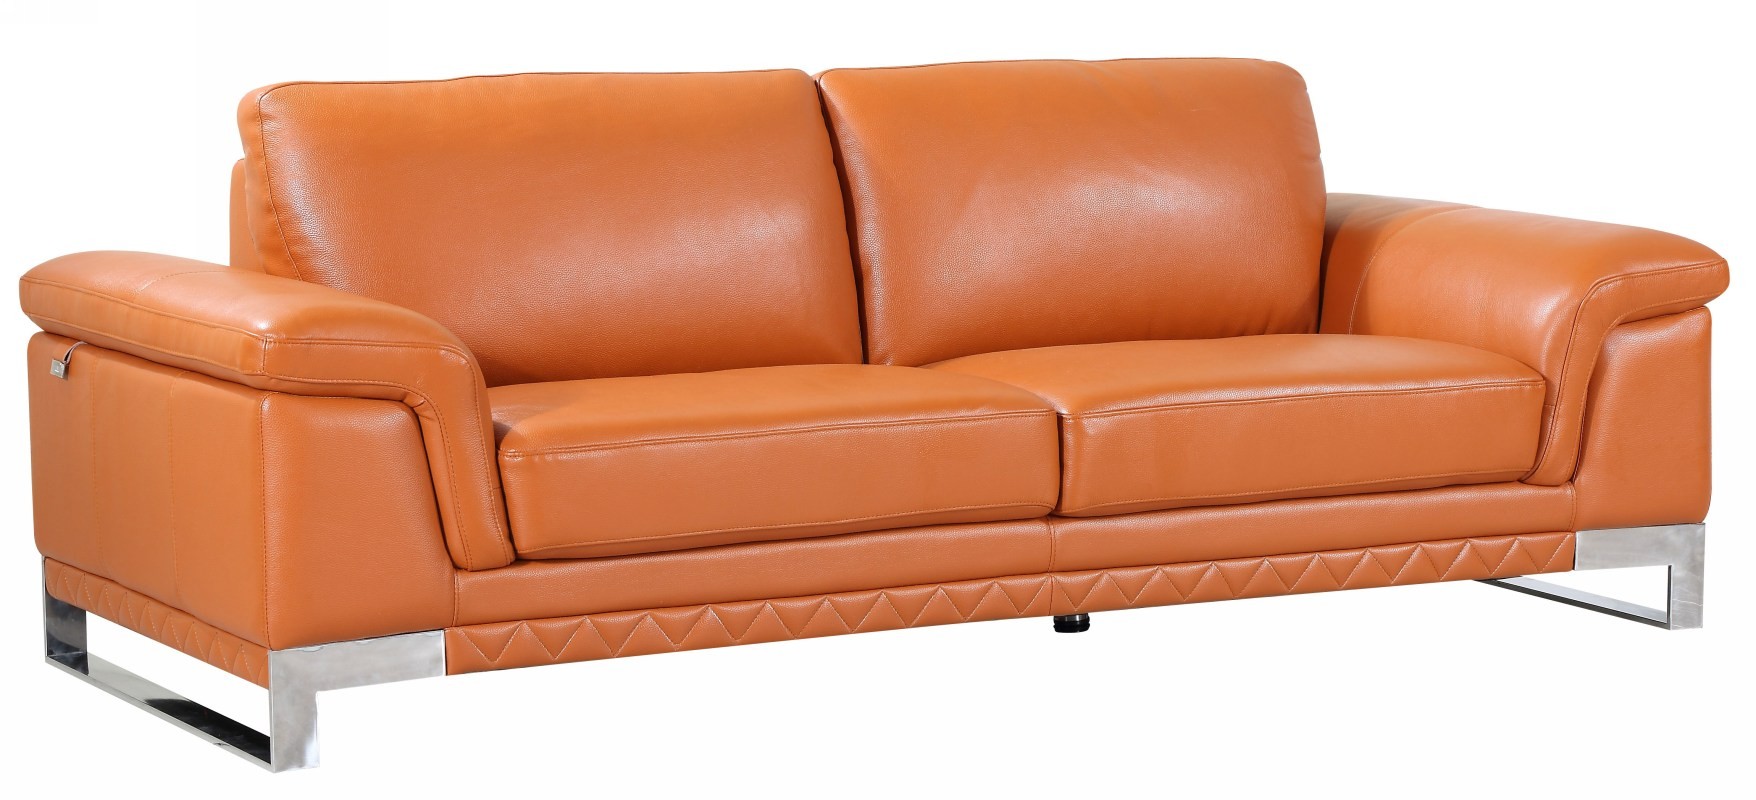 leather match sofa camel color